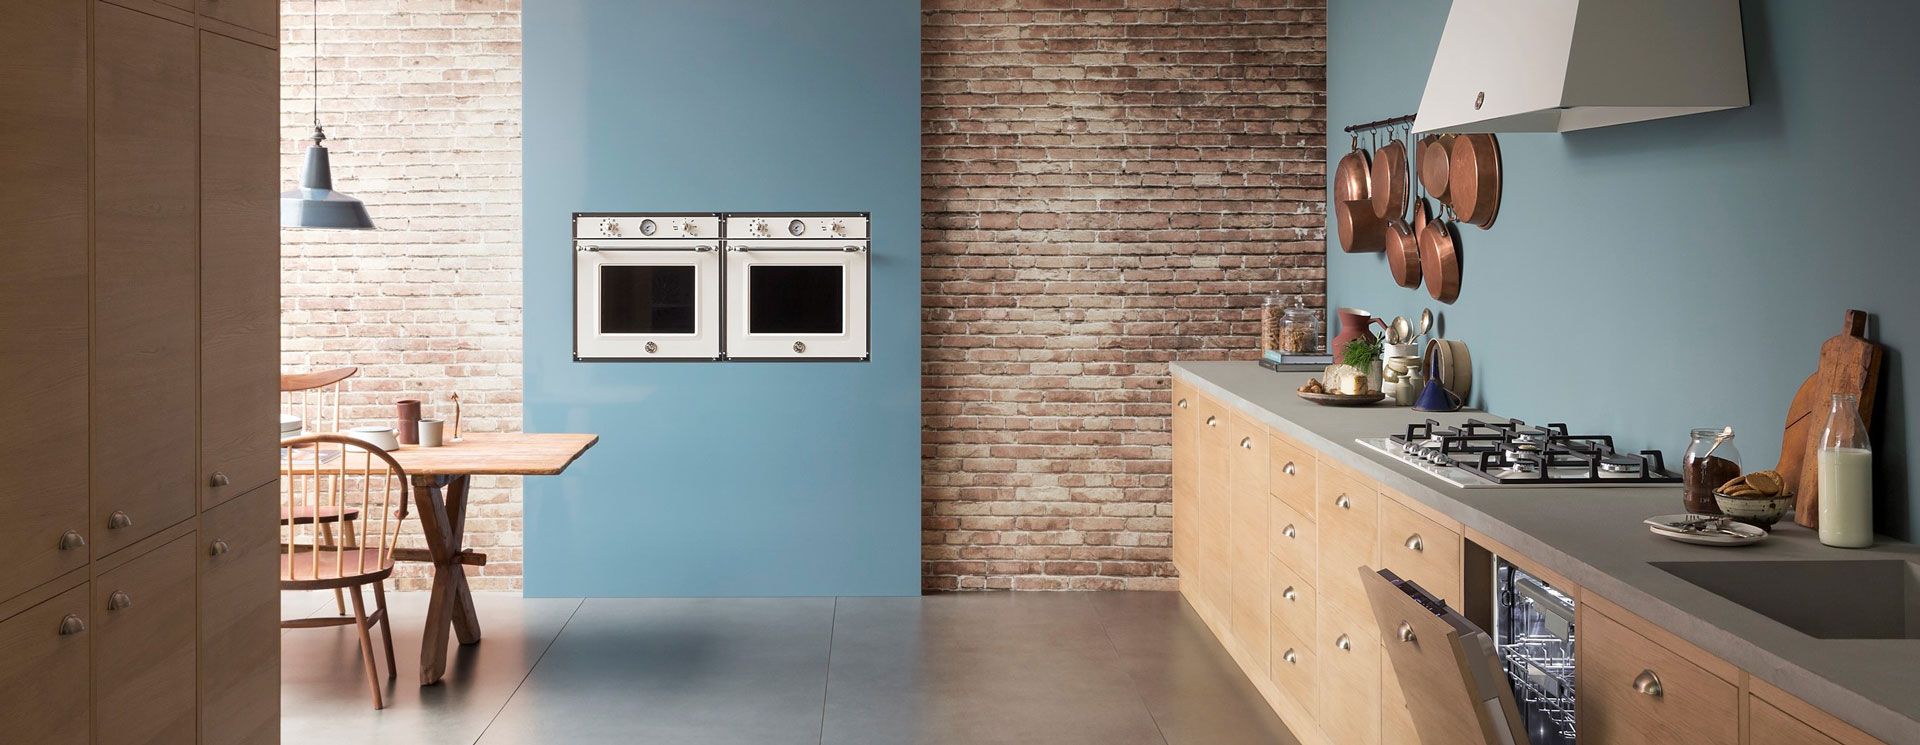 bertazzoni luxury appliance double ovens at caterbitz